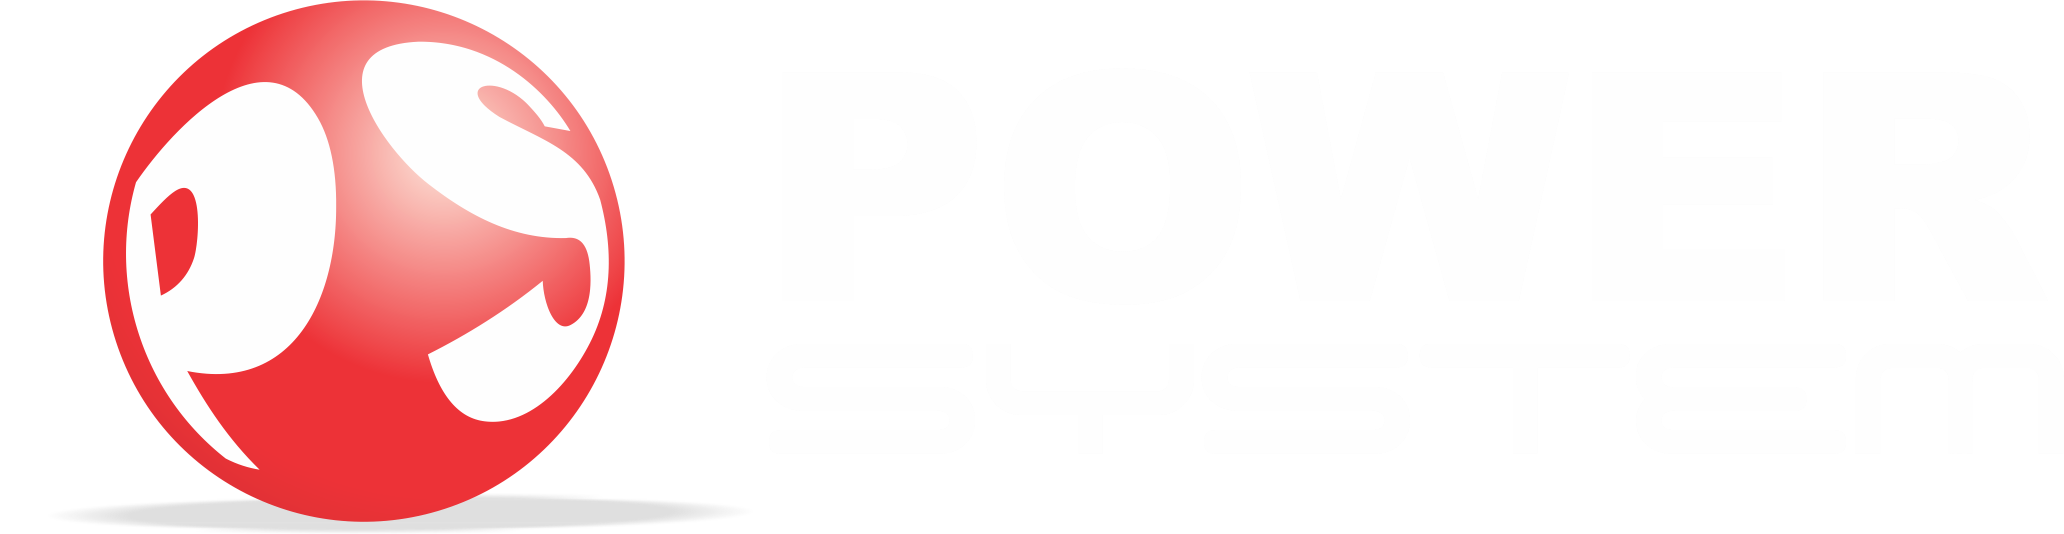 POWER SYSTEM